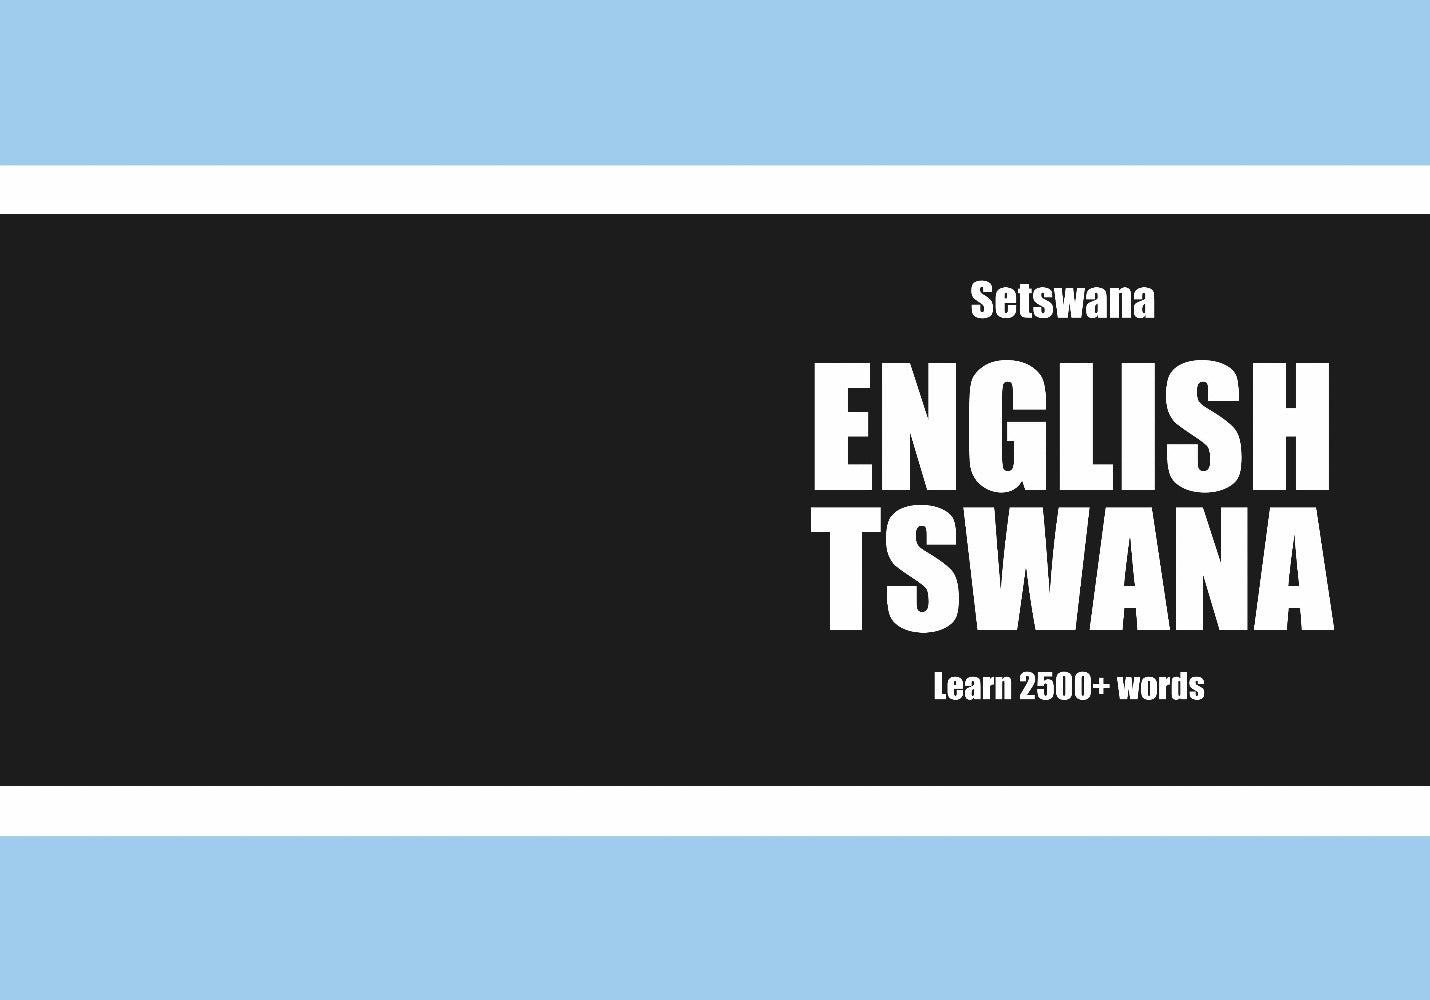 Tswana language learning notebook cover